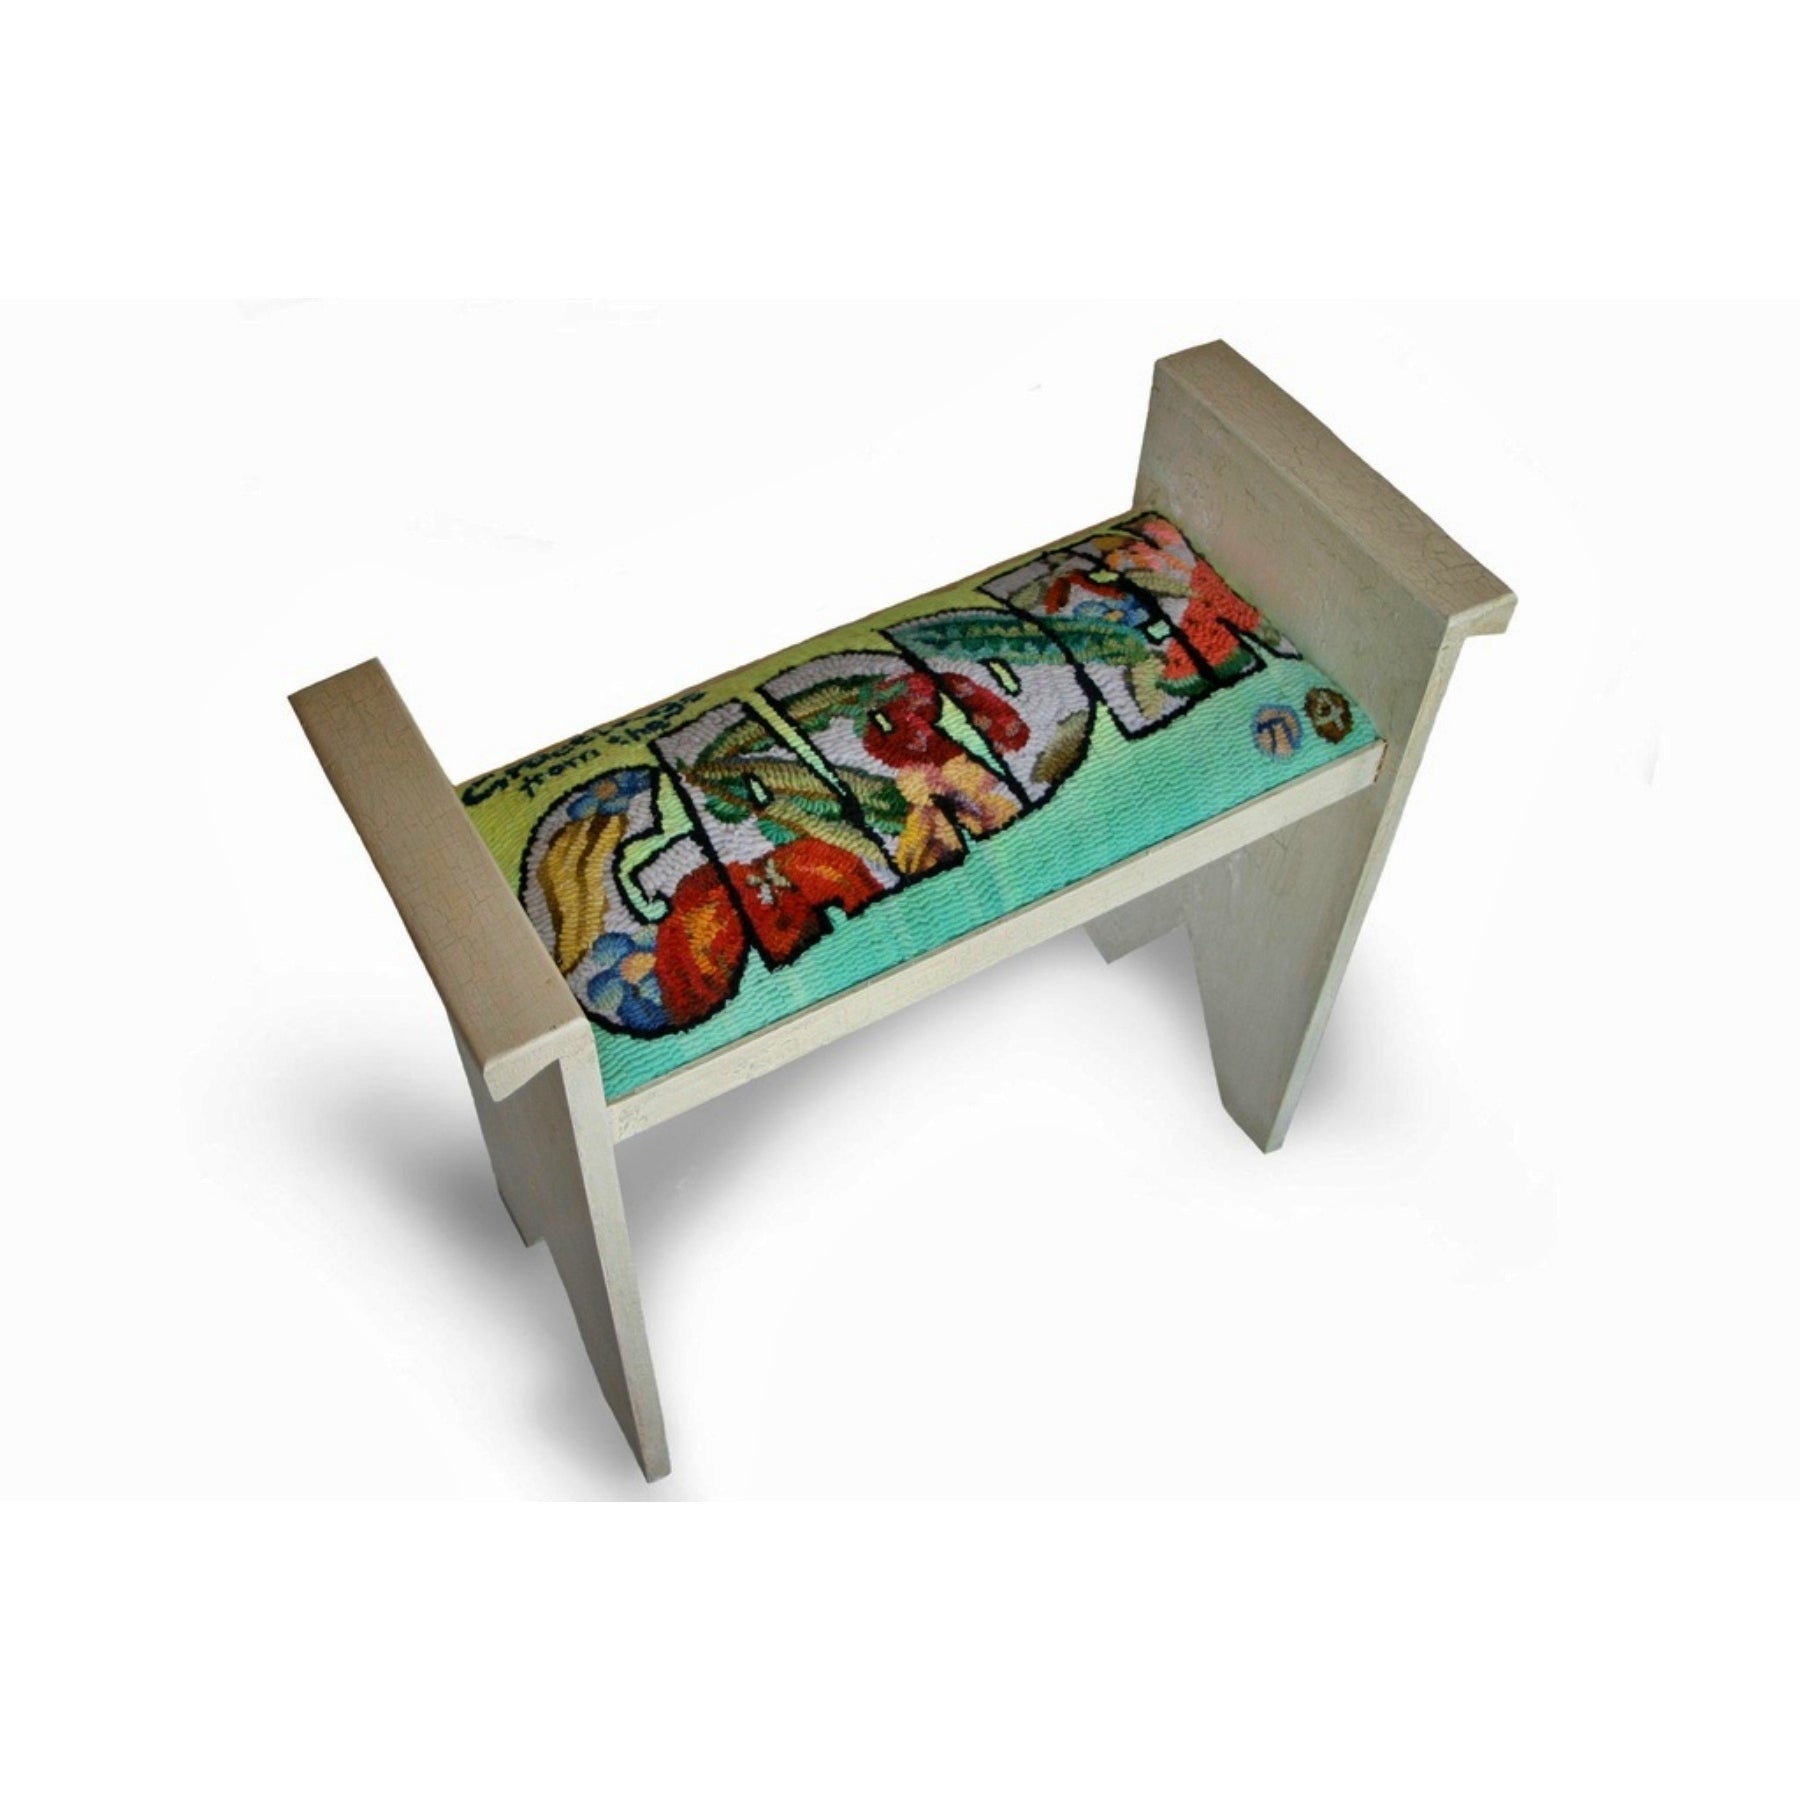 Garden - Bench Footstool Pattern, rug hooked by Kim Nixon